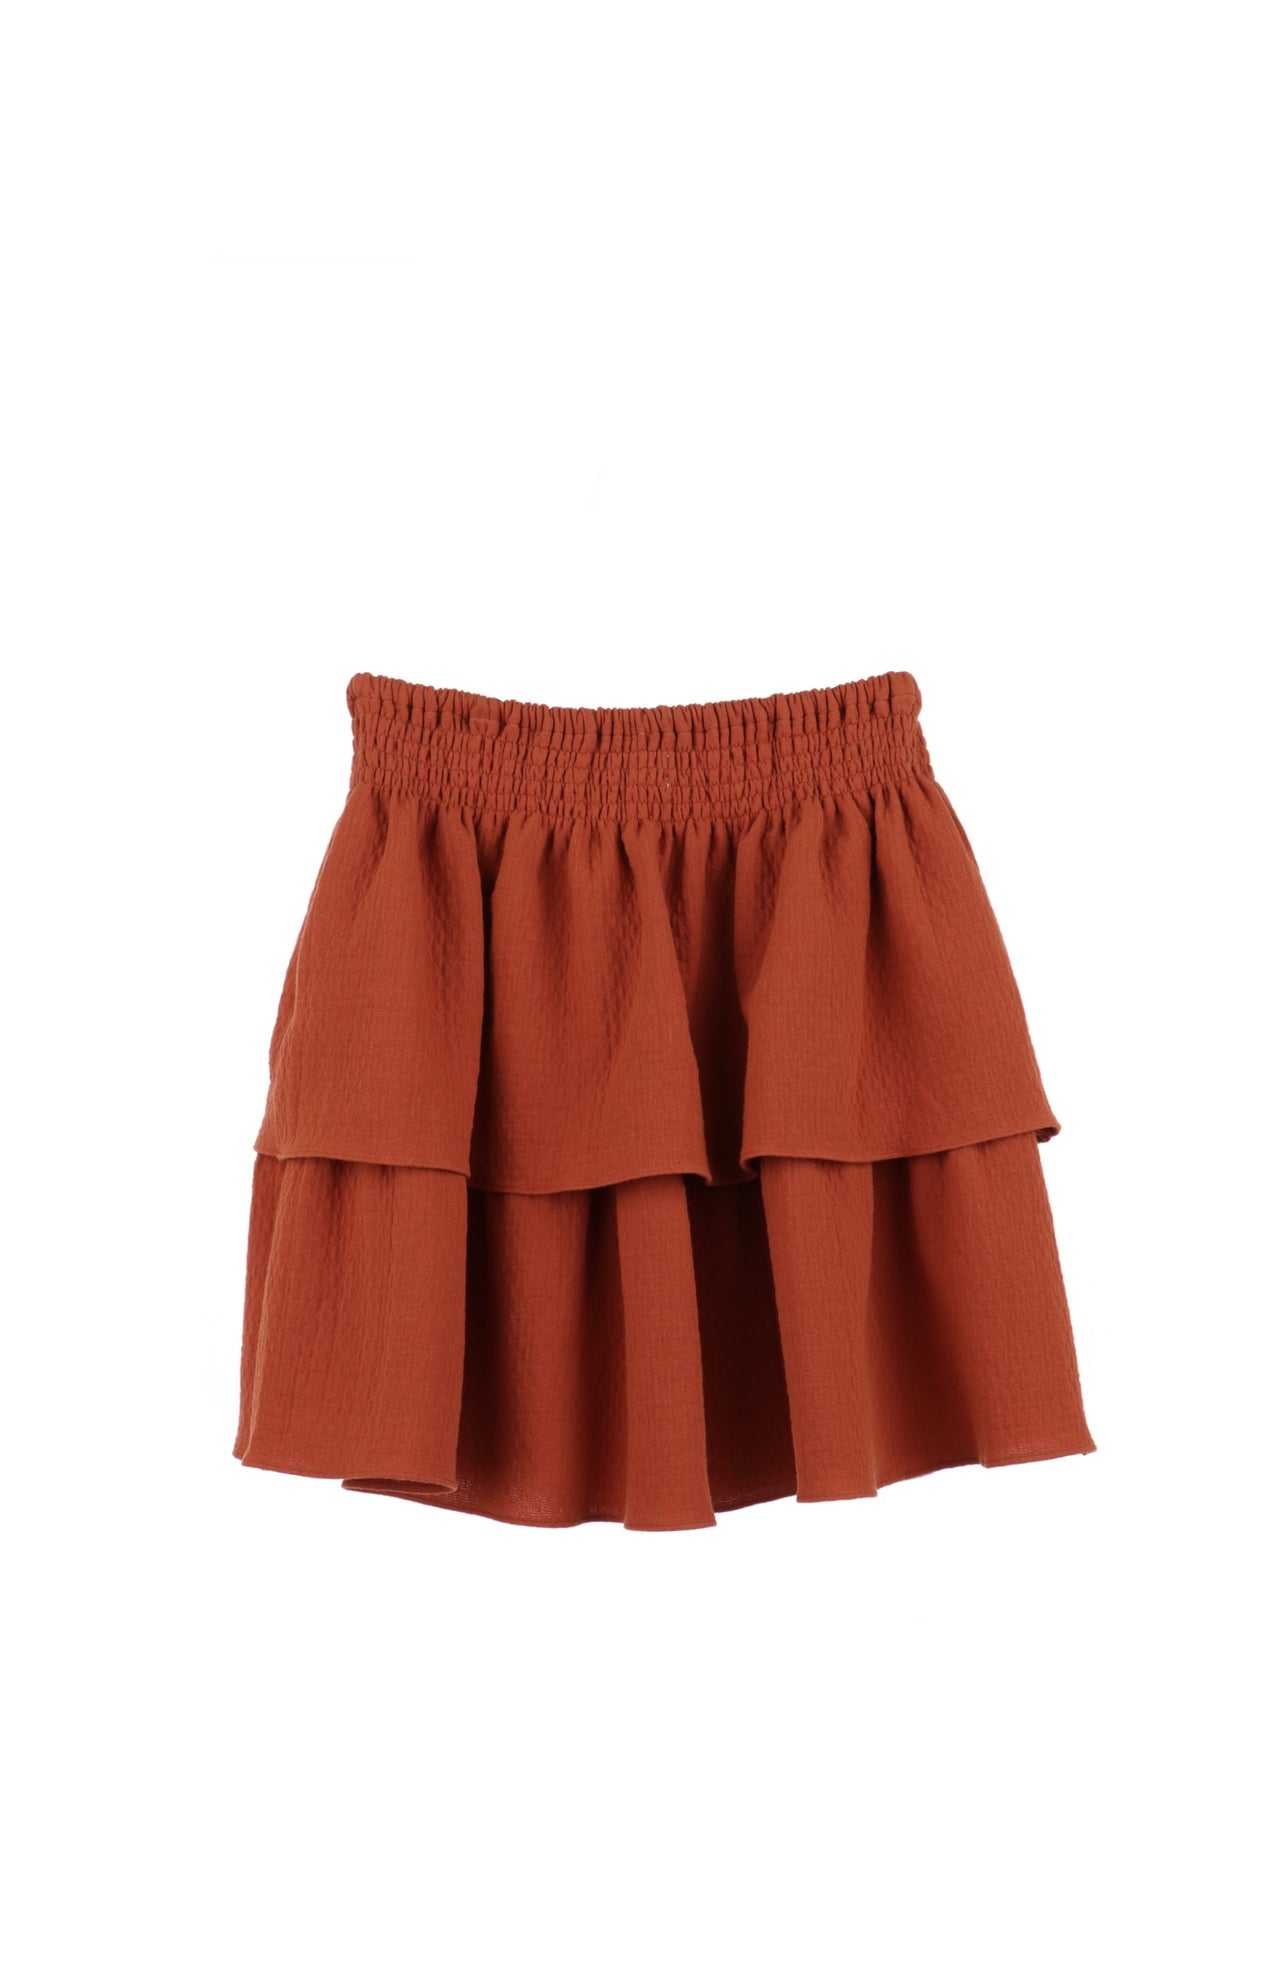 Gabby Paola Brown Skirt G1921 5008